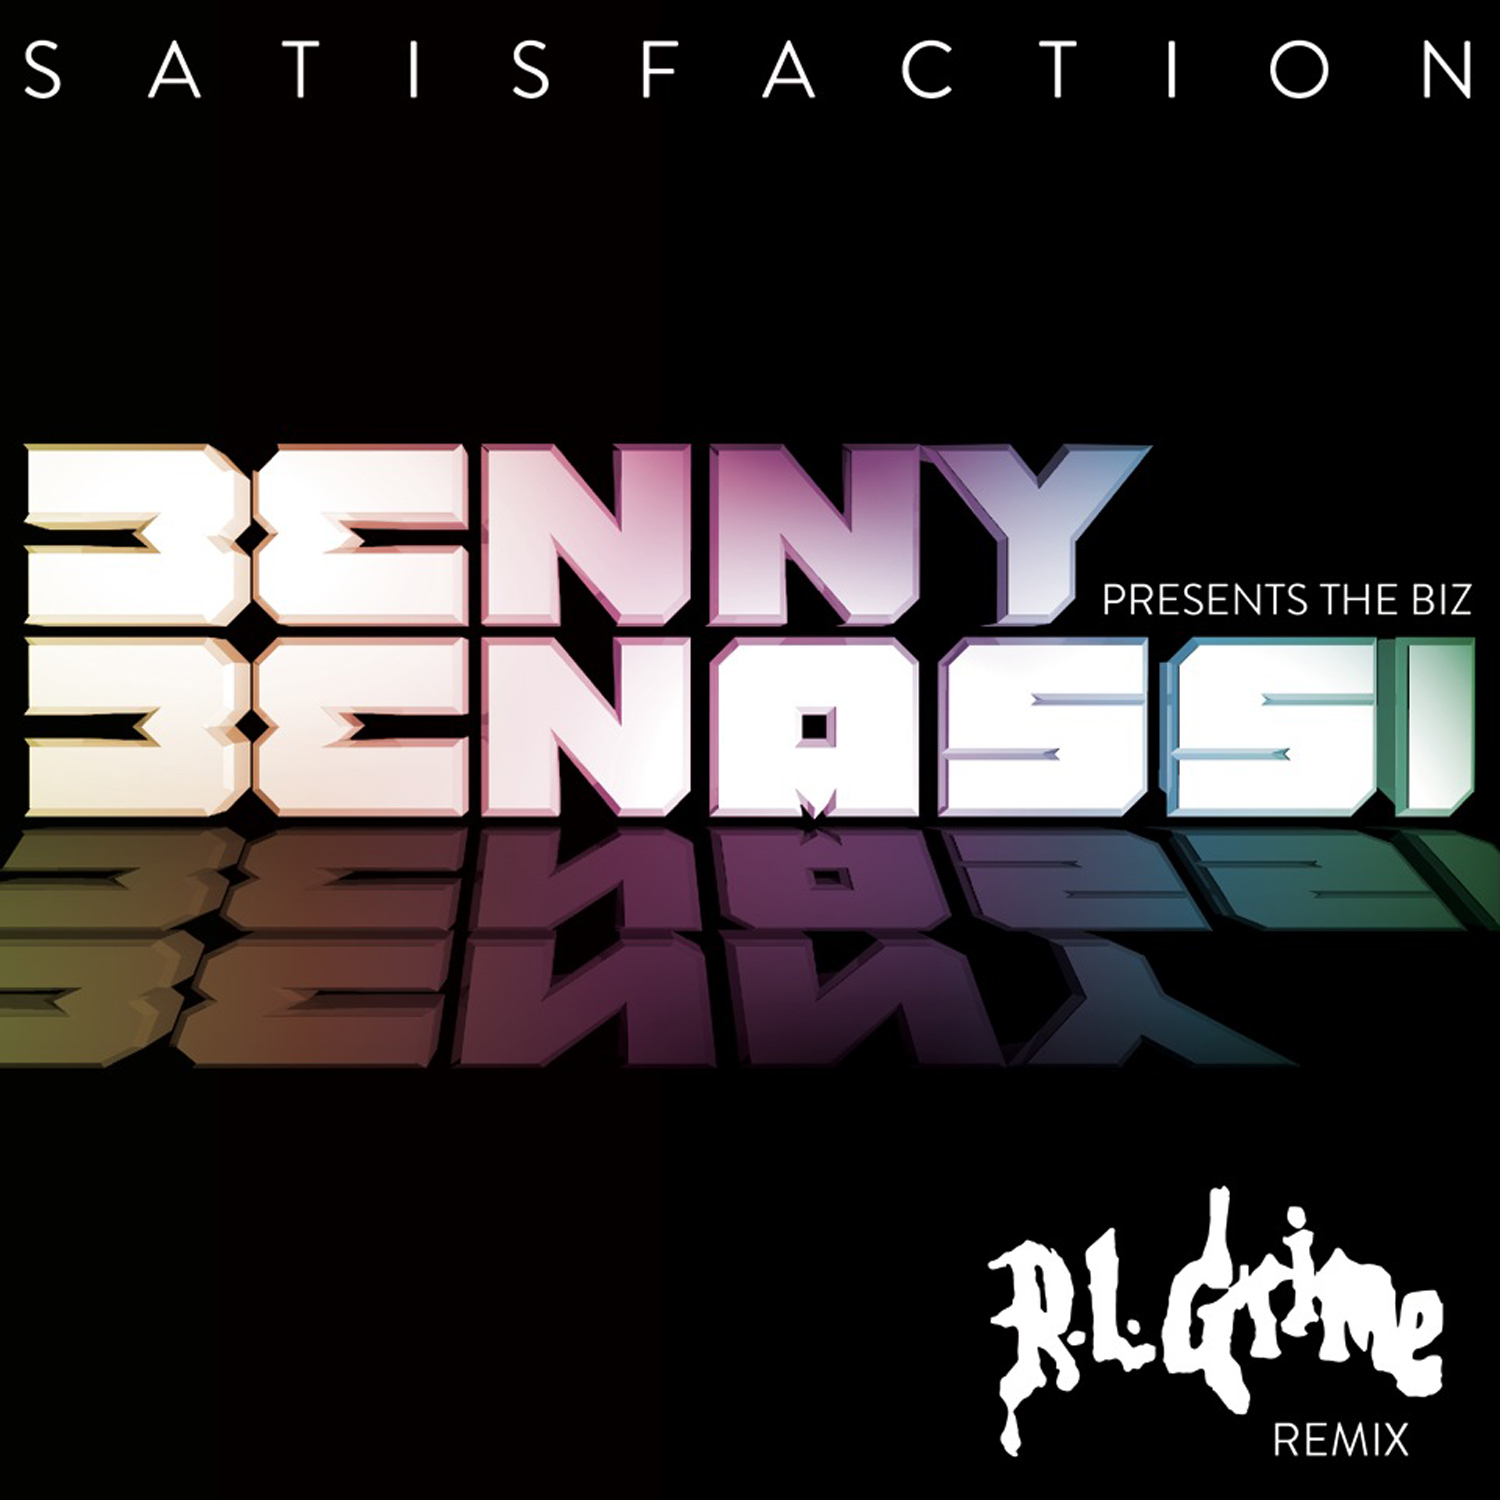 Télécharger Satisfaction (RL Grime Remix) - Benny Benassi (Preview)